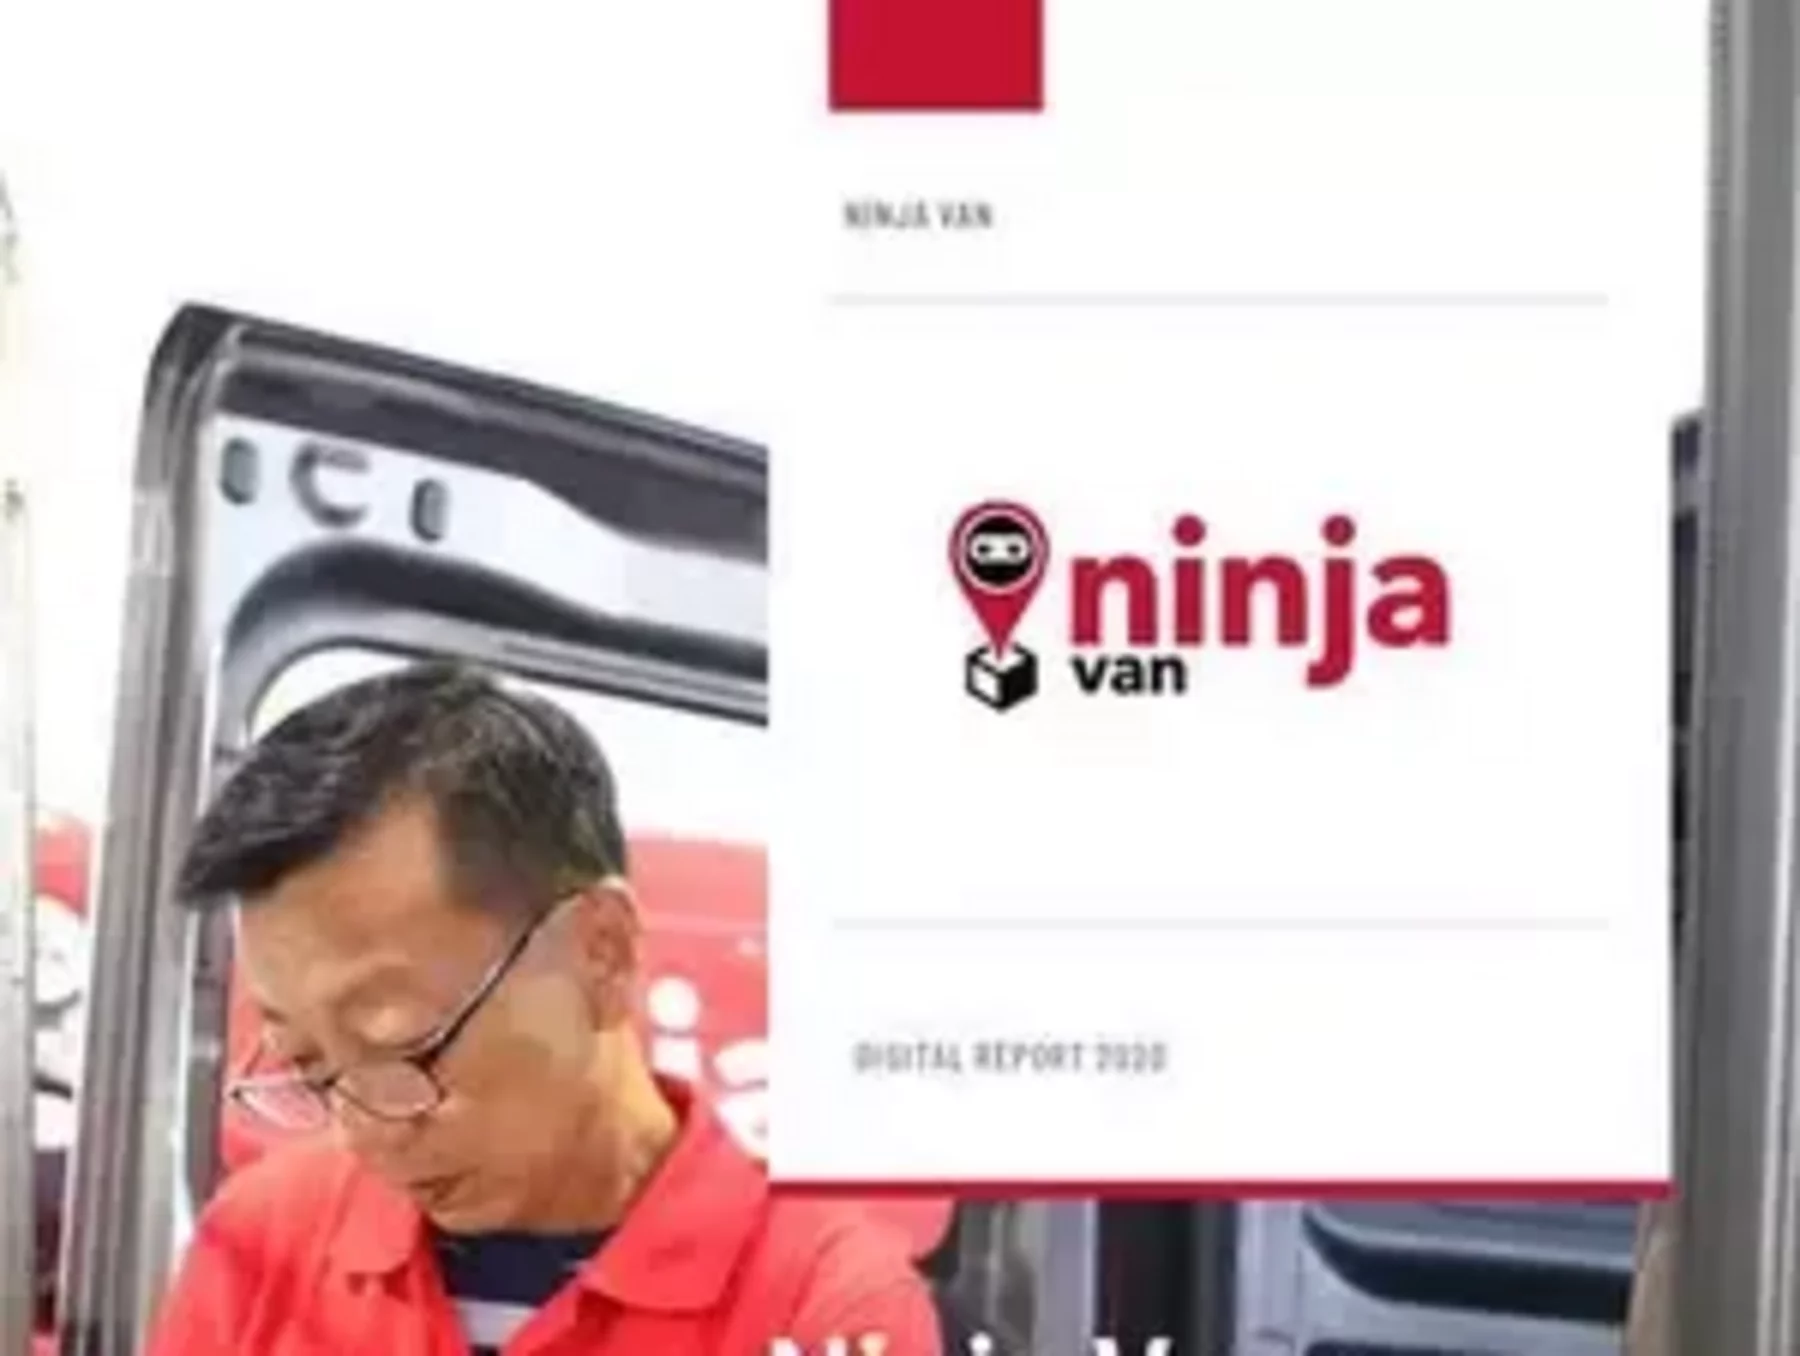 Ninjavan operator